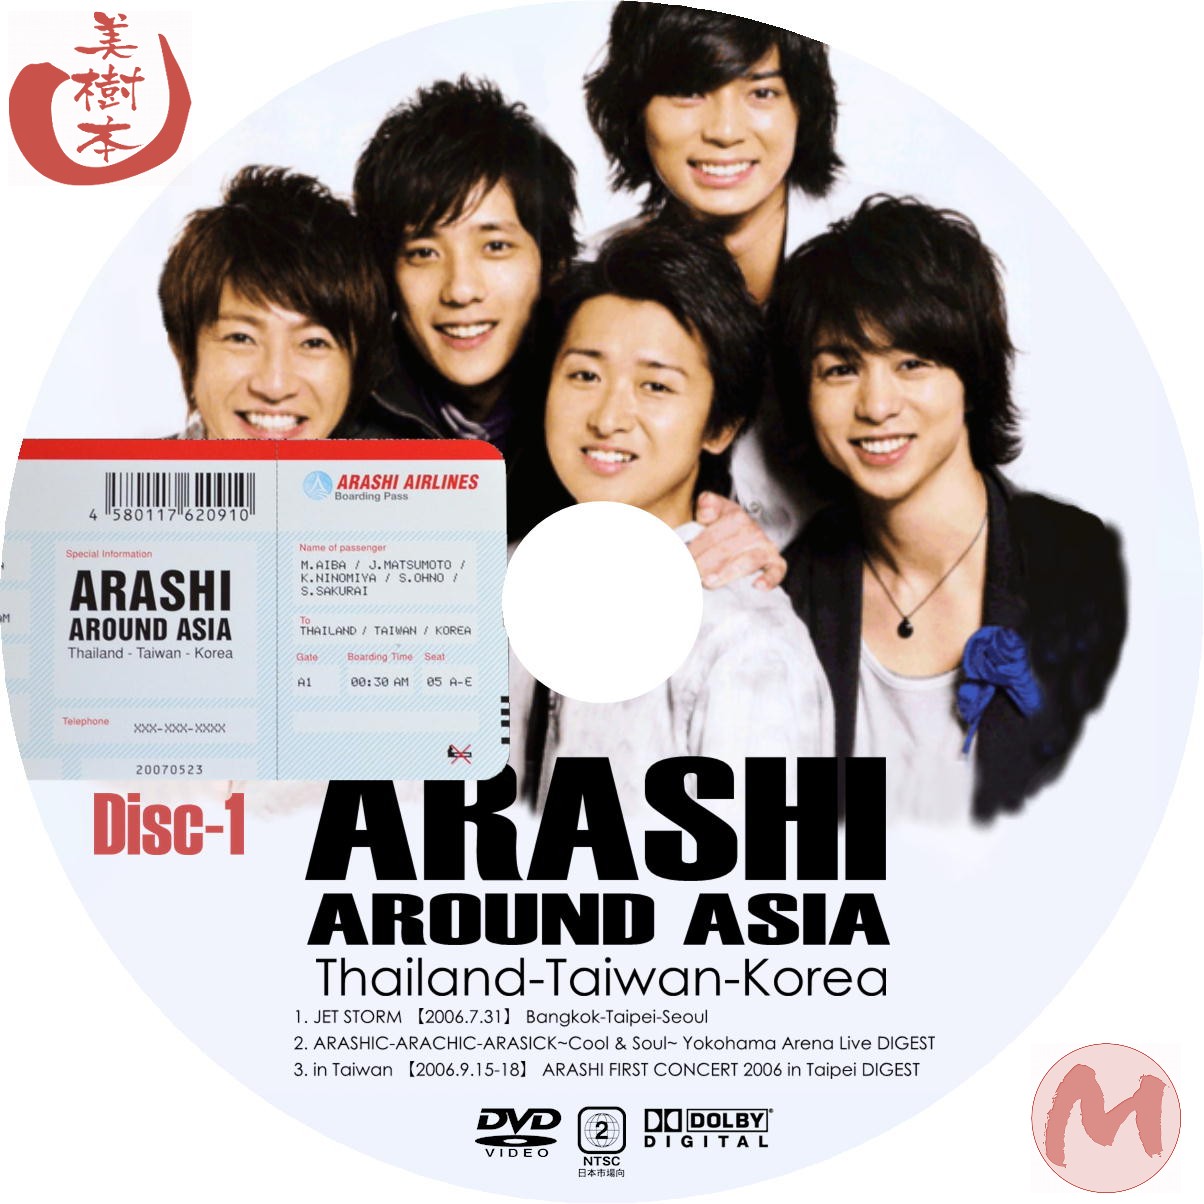 ARASHI AROUND ASIA Thailand-Taiwan-Korea (再UP) - 自己れ～べる